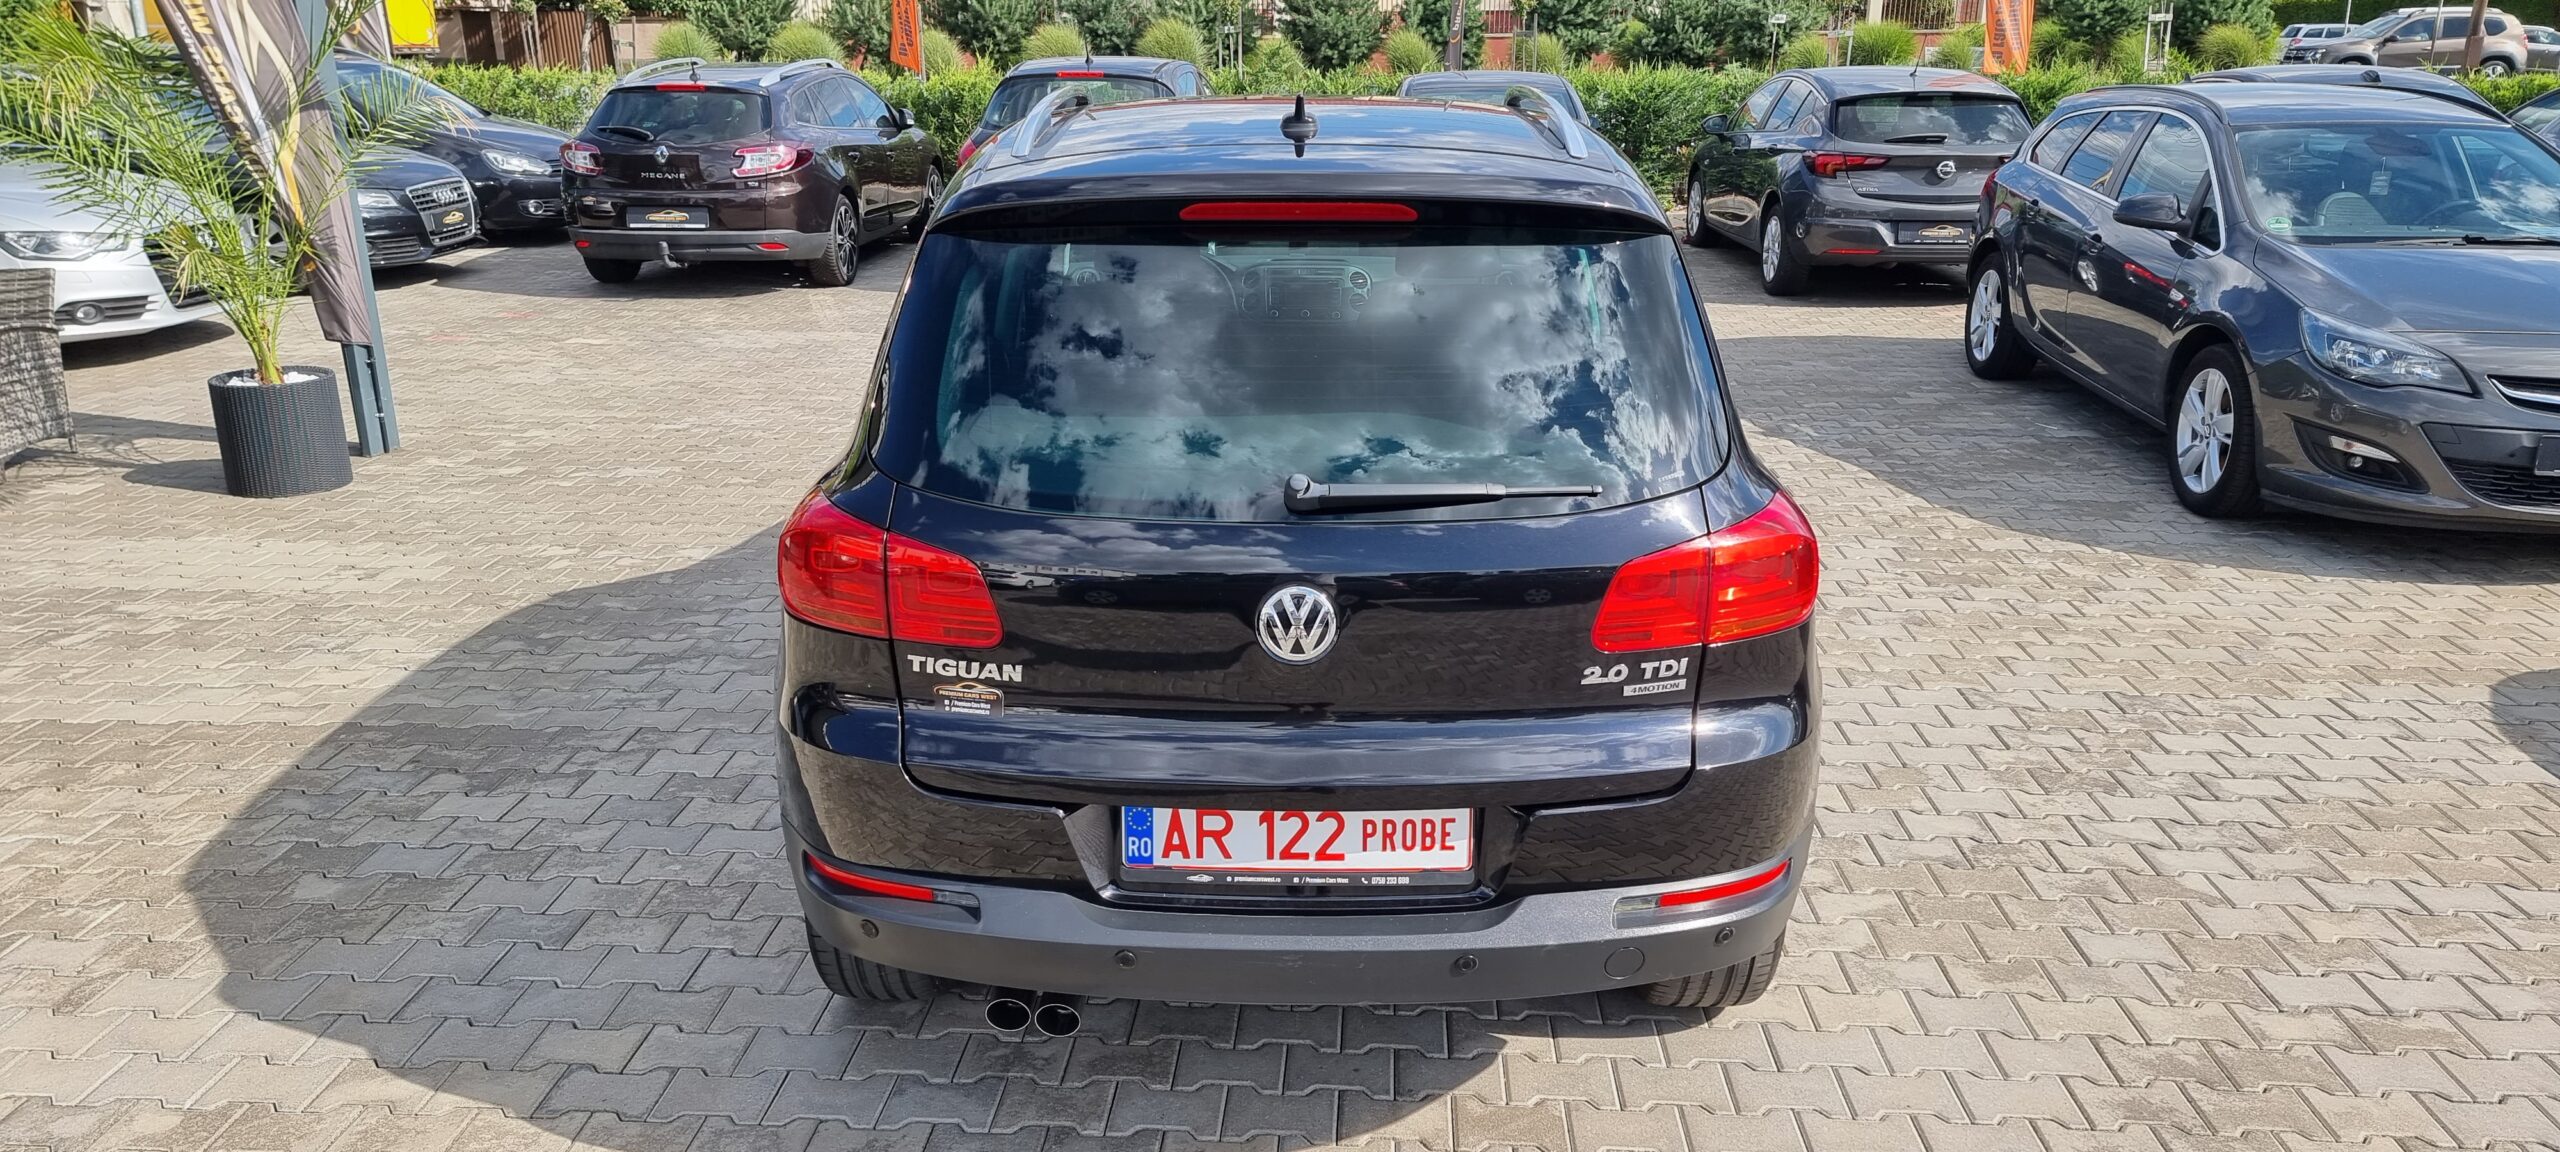 VW TIGUAN 4 MOTION, 2.0 TDI, 140 CP, EURO 5, AN 2012